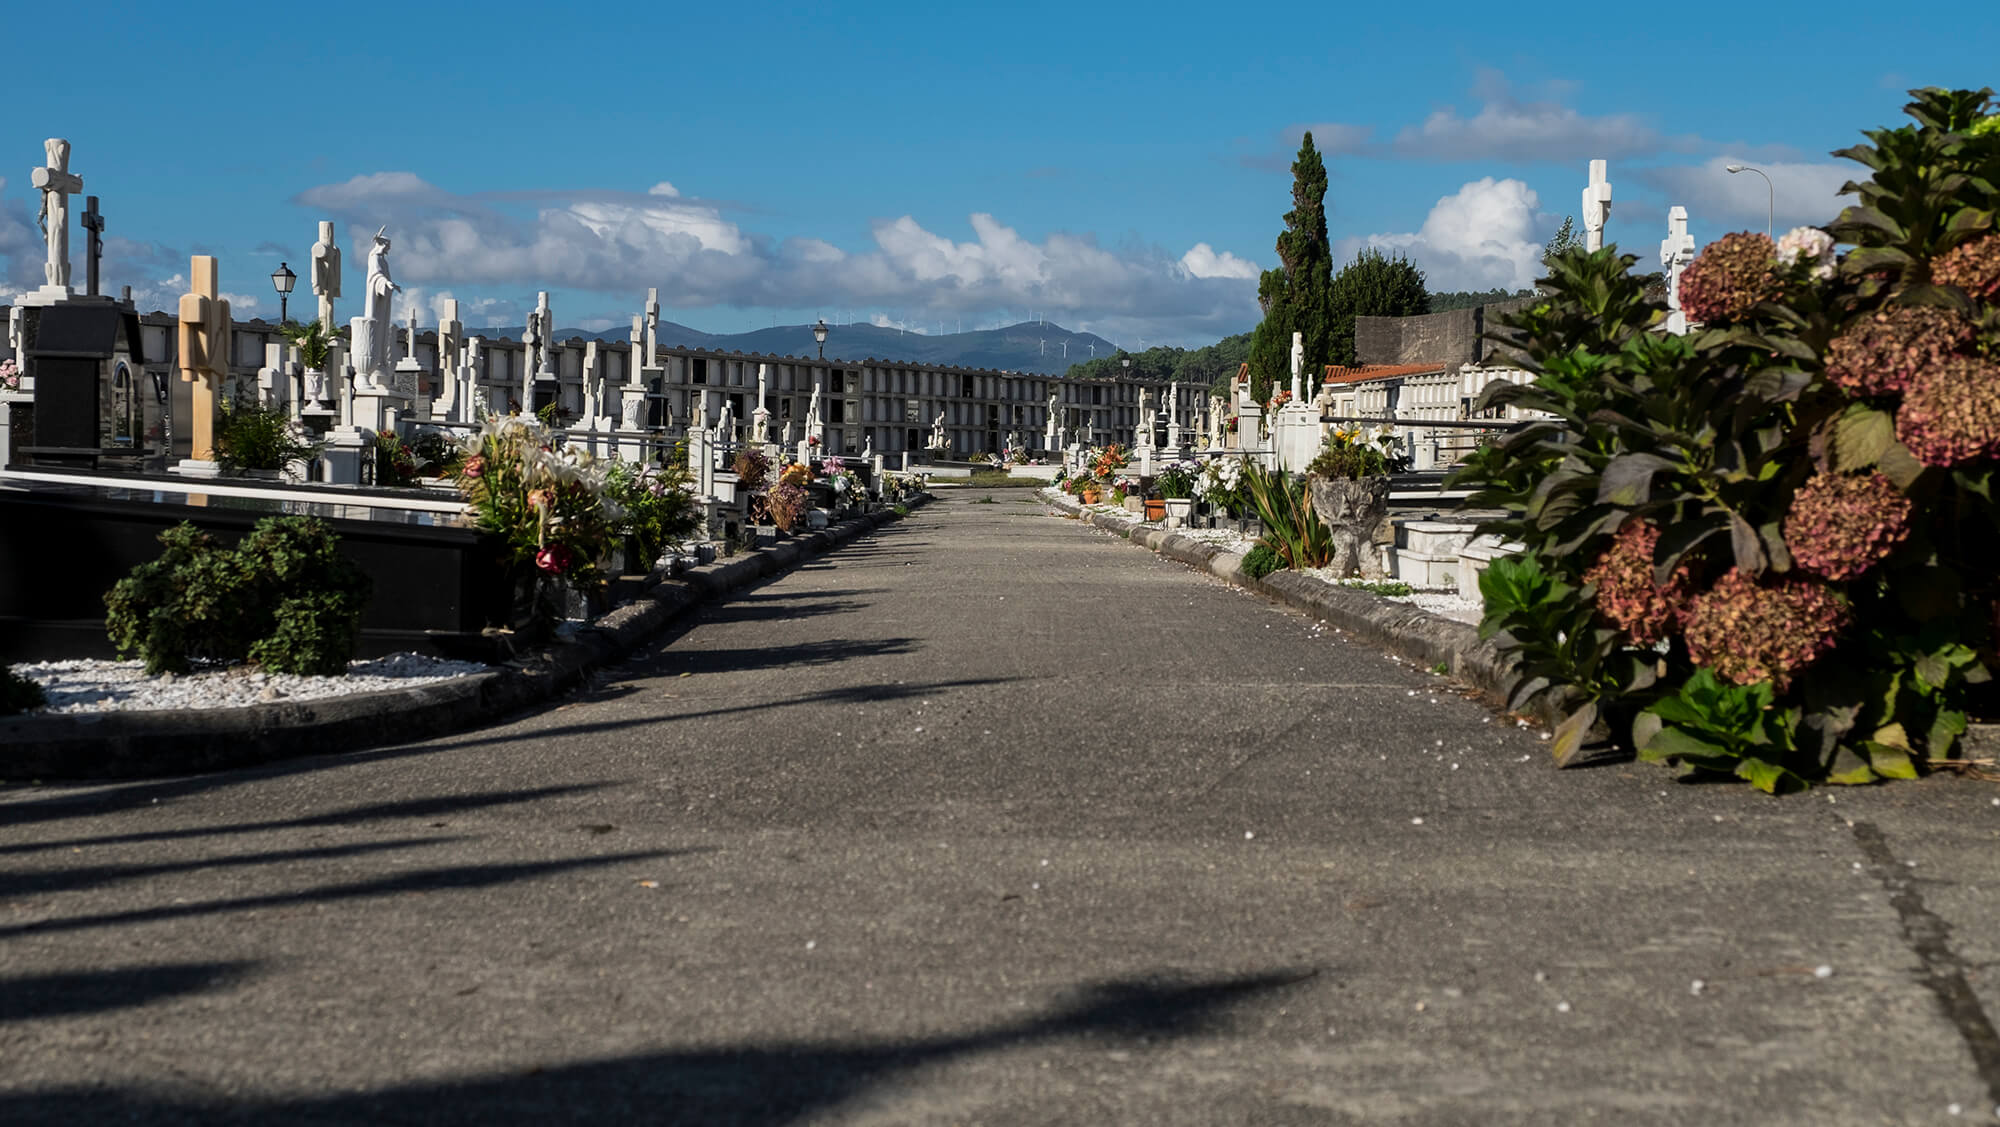 Ría de Muros y Noia. Porto do Son. Cementerio